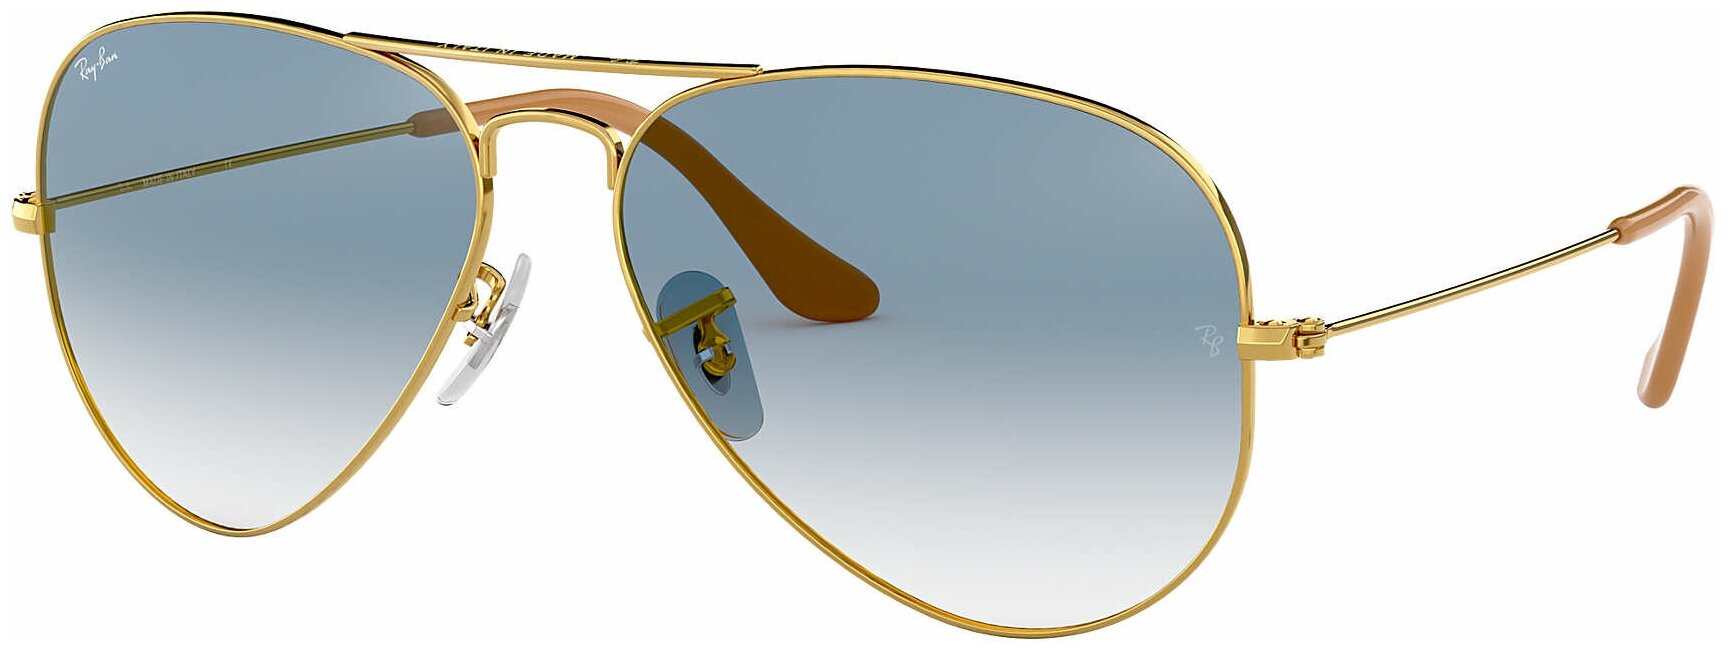 Солнцезащитные очки Ray-Ban RB 3025 001/3F 